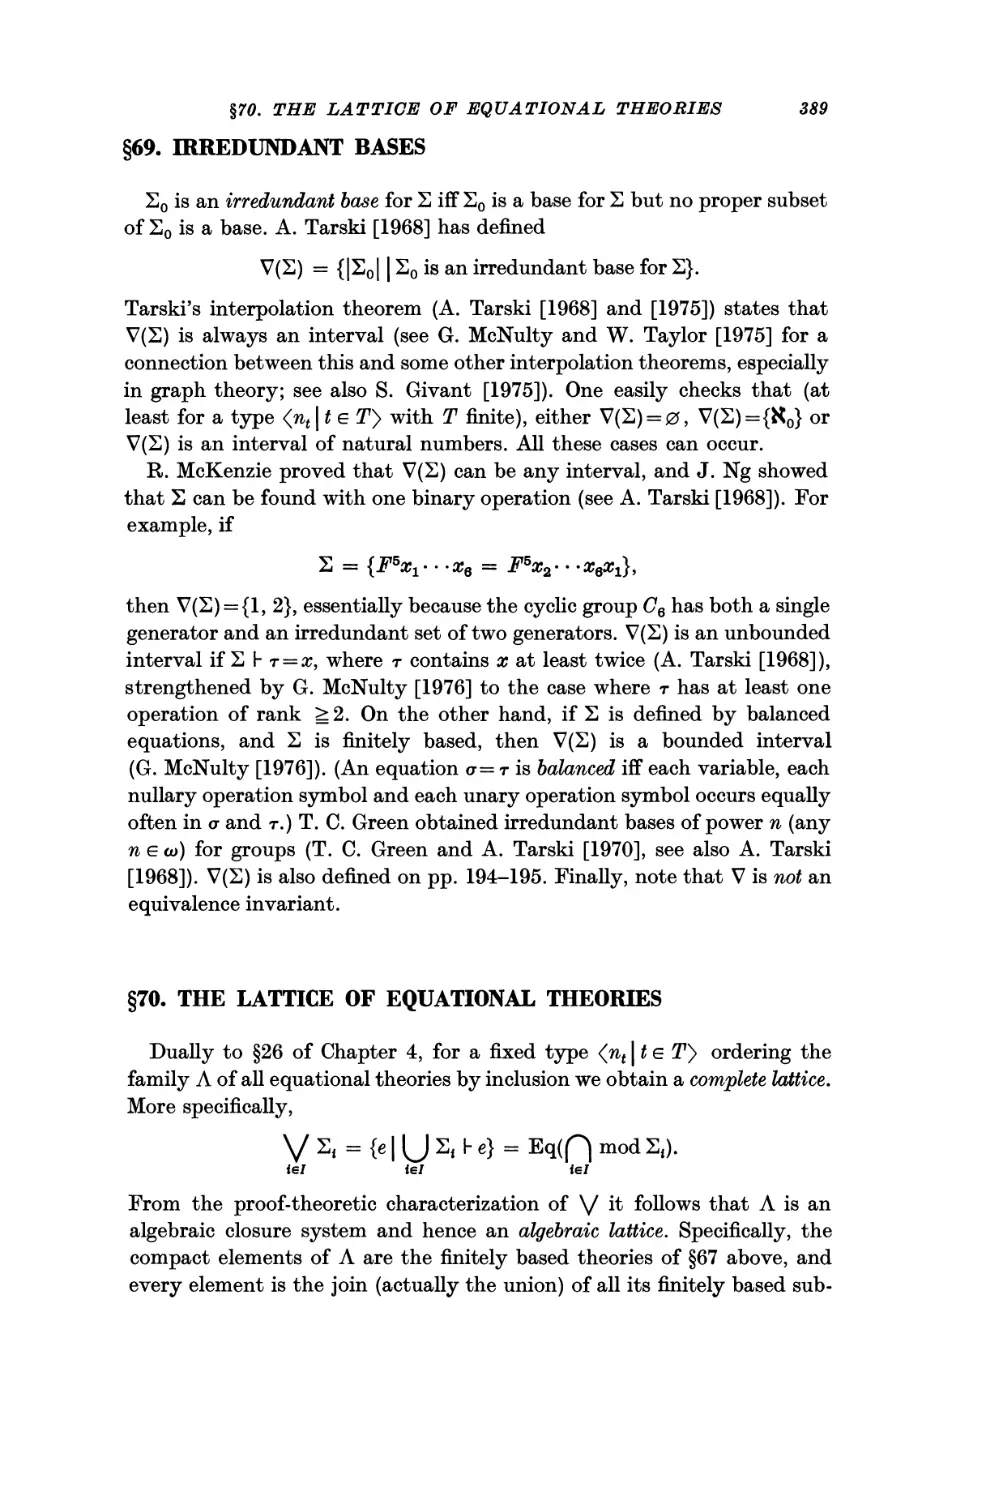 §69. Irredundant Bases
§70. The Lattice of Equational Theories